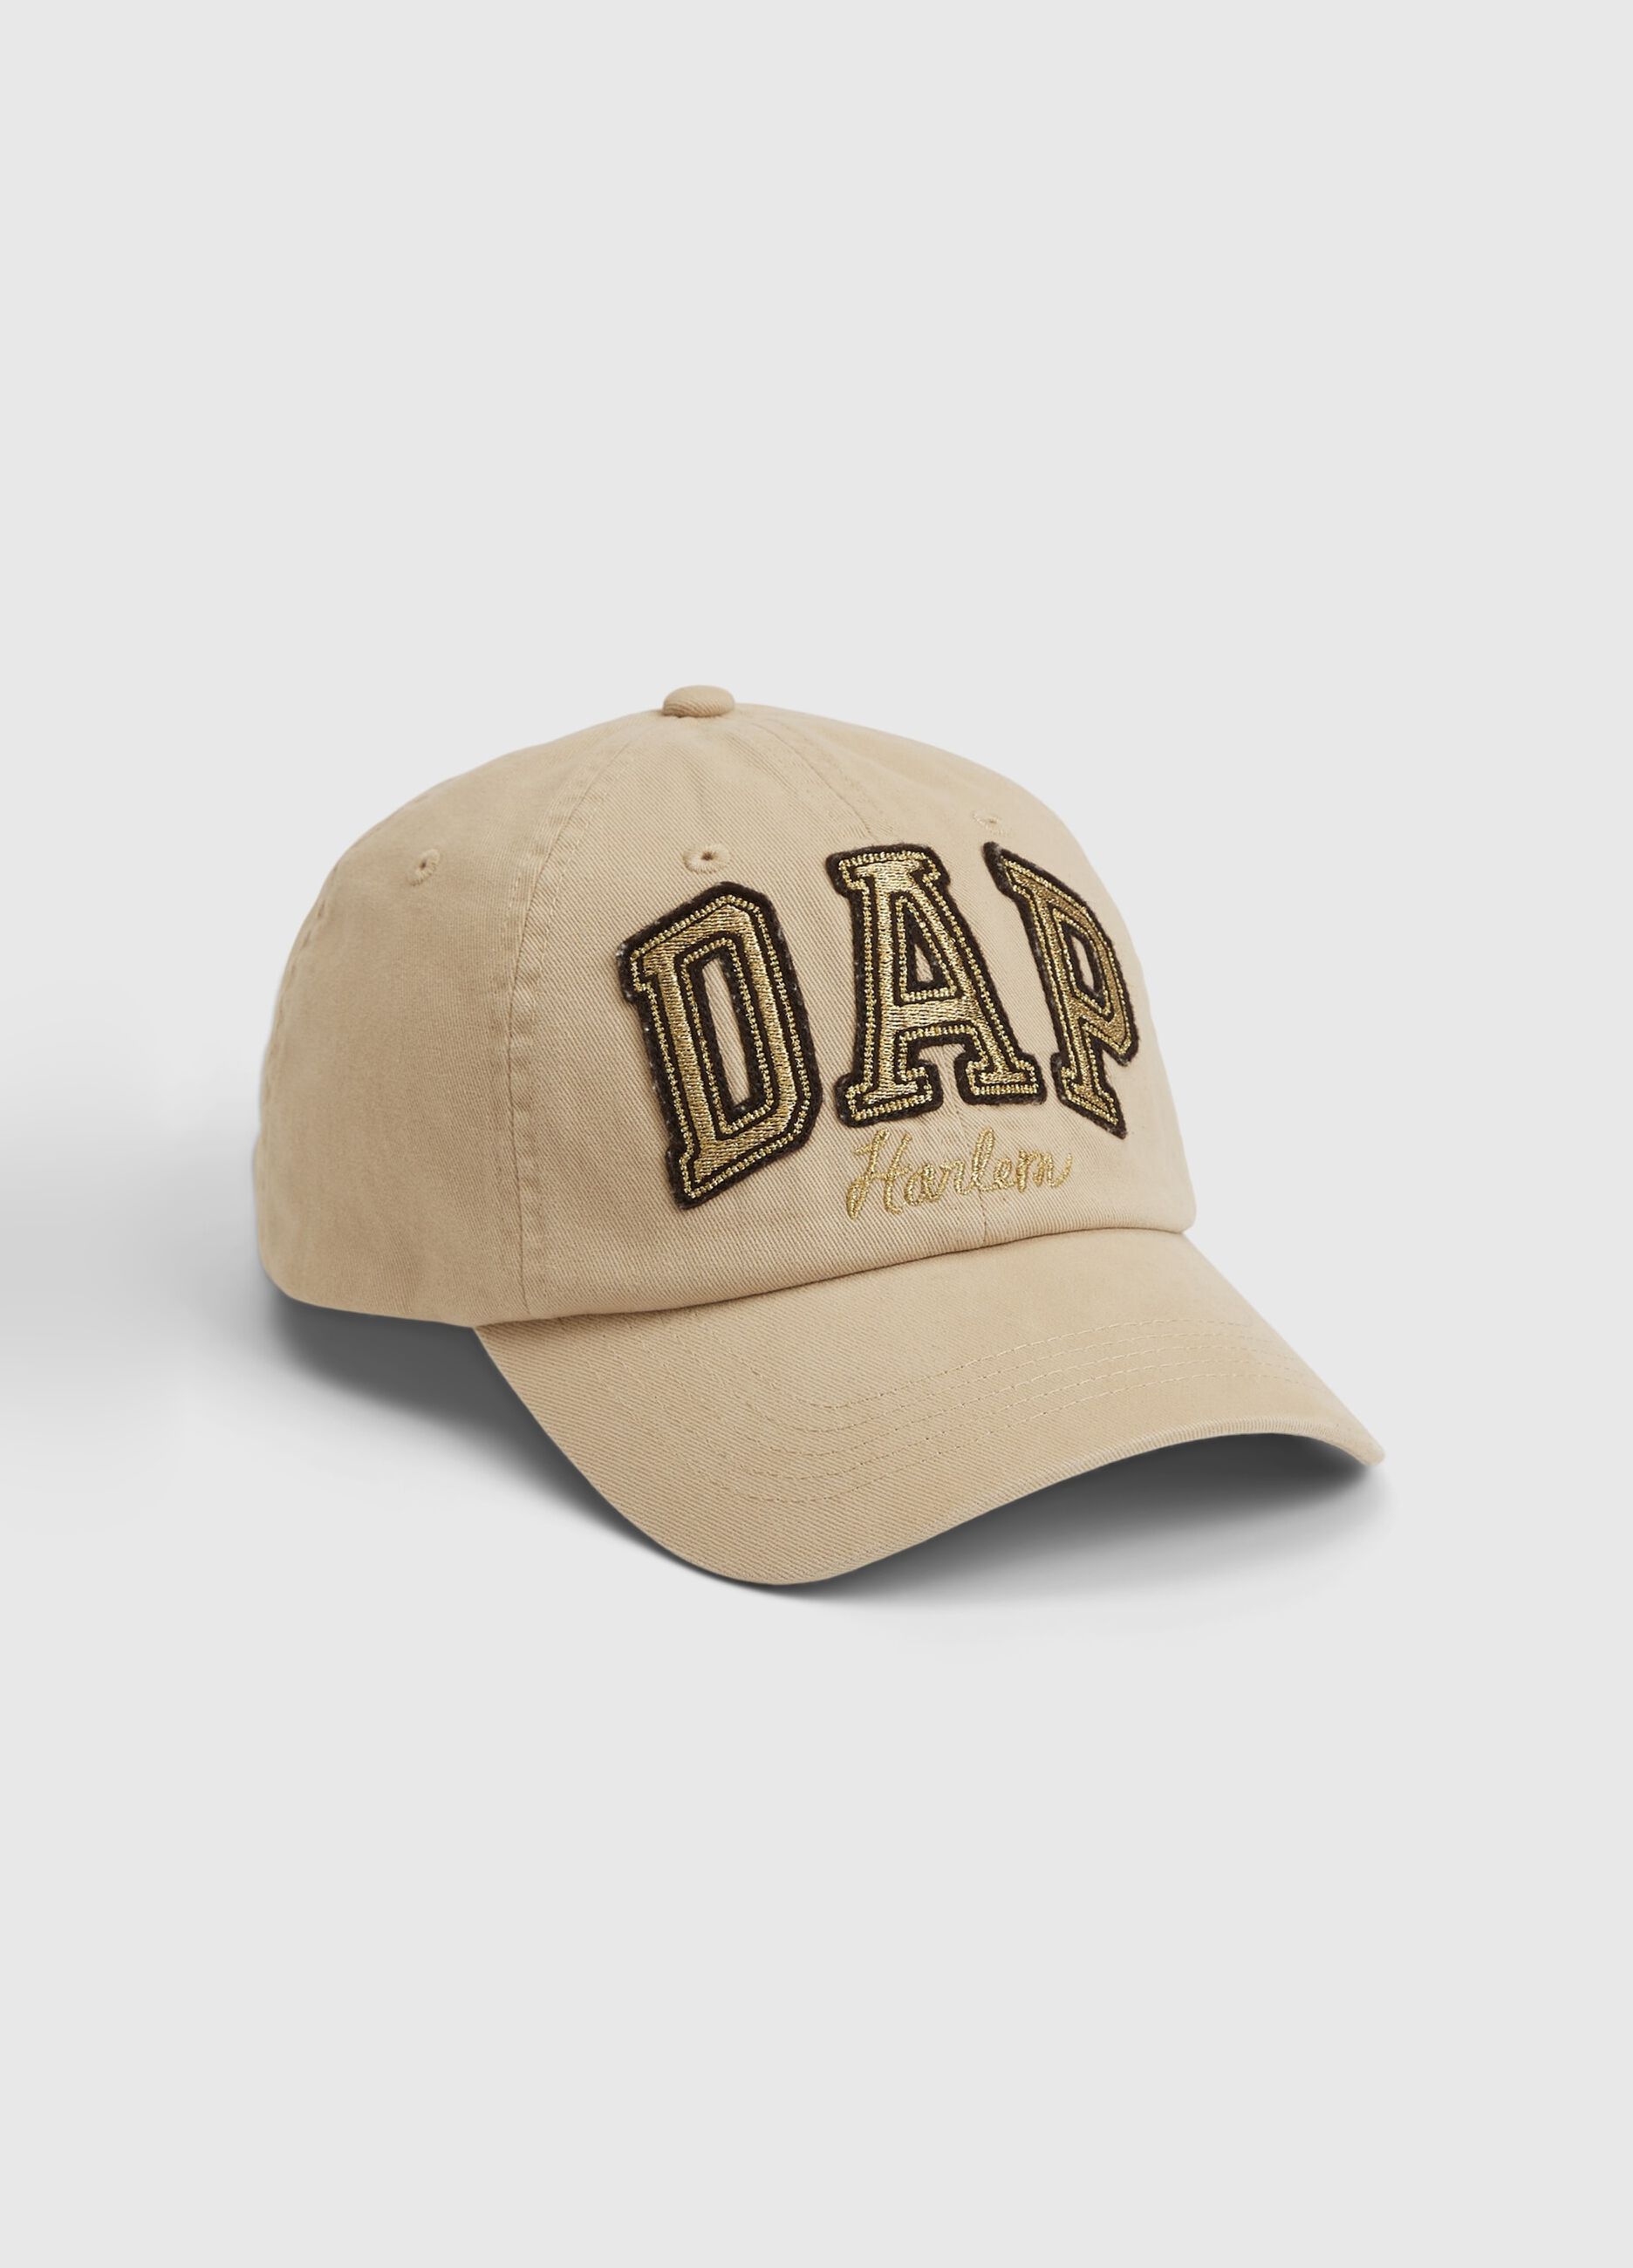 Baseball cap with Dapper Dan of Harlem embroidery